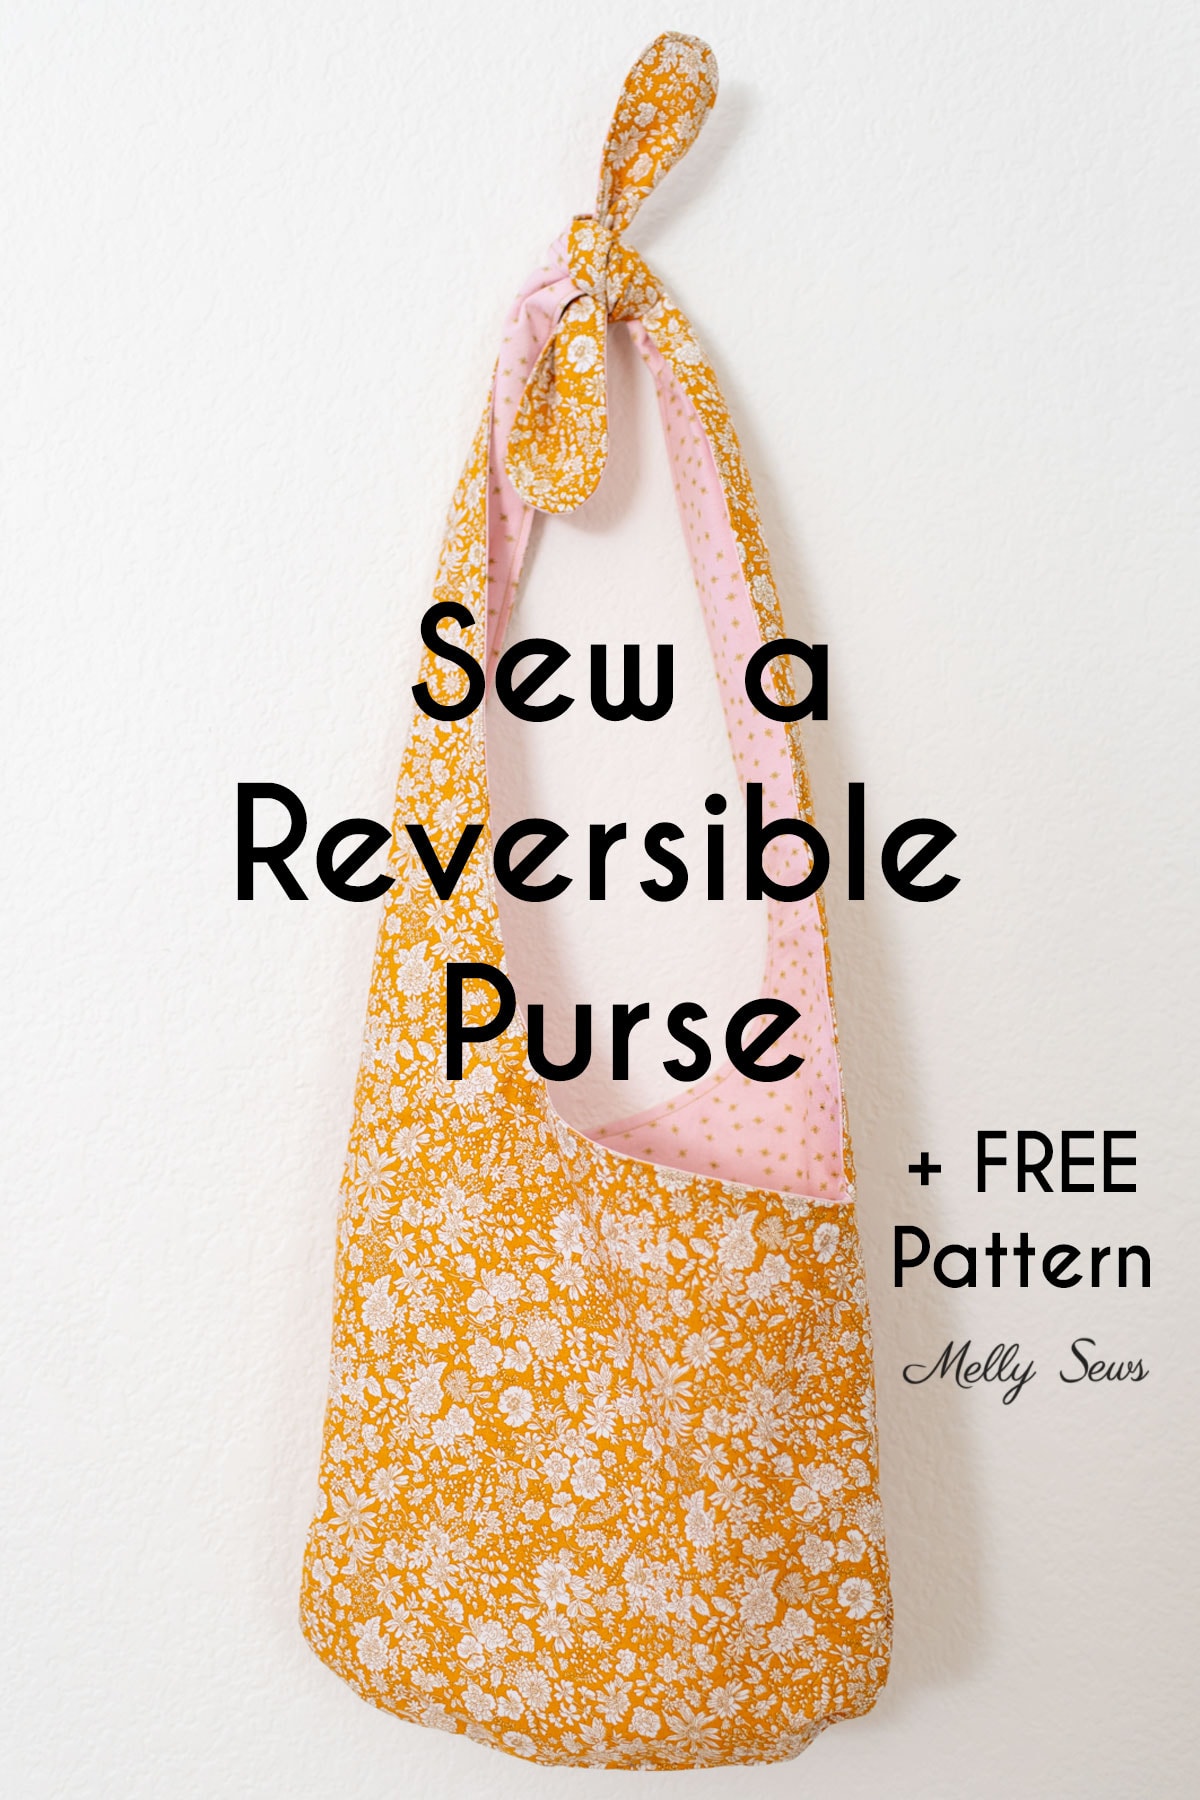 Sew Powerful FREE Crossbody Bag Purse sewing pattern - Sew Modern Bags